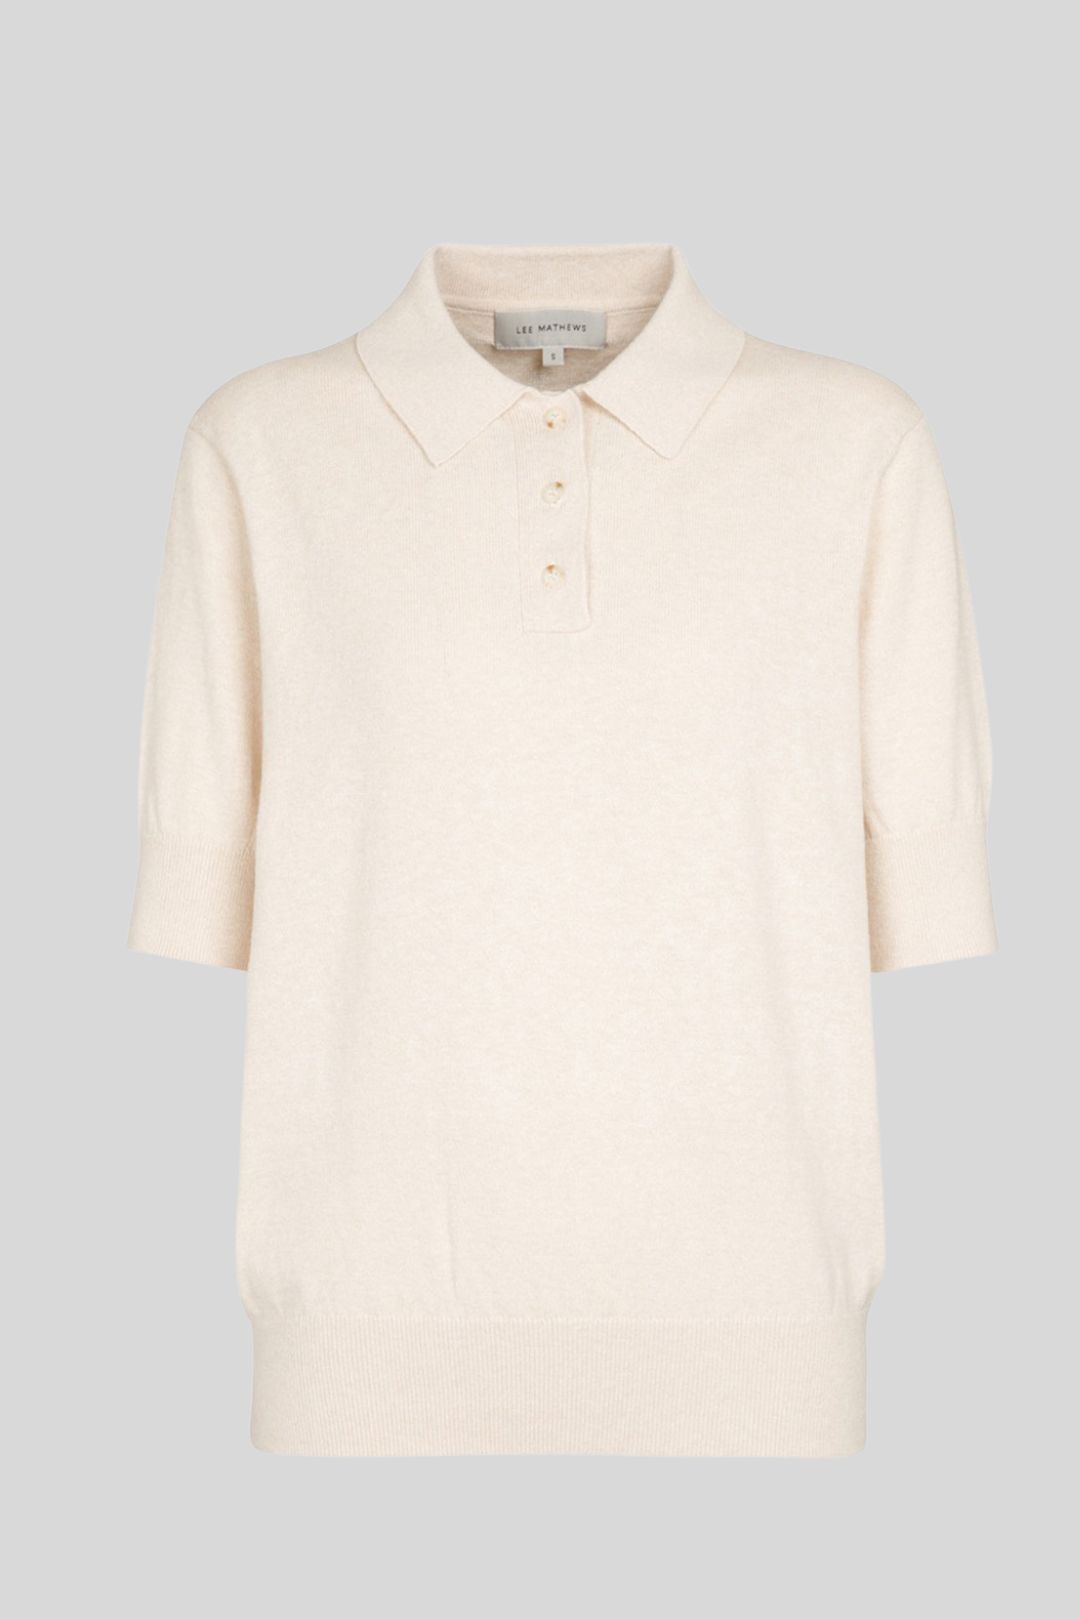 Short Sleeve Knit Shirt in Cream